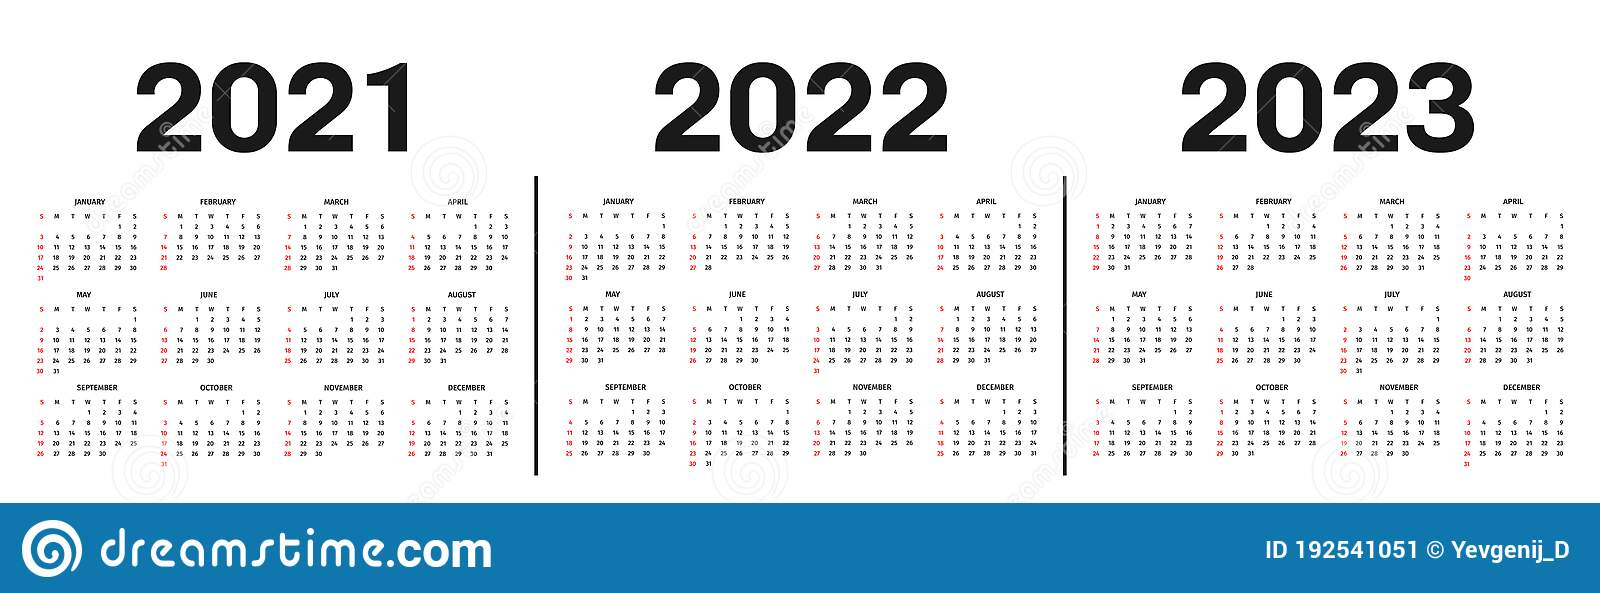 U Of M Calendar 2022-2023 - January Calendar 2022